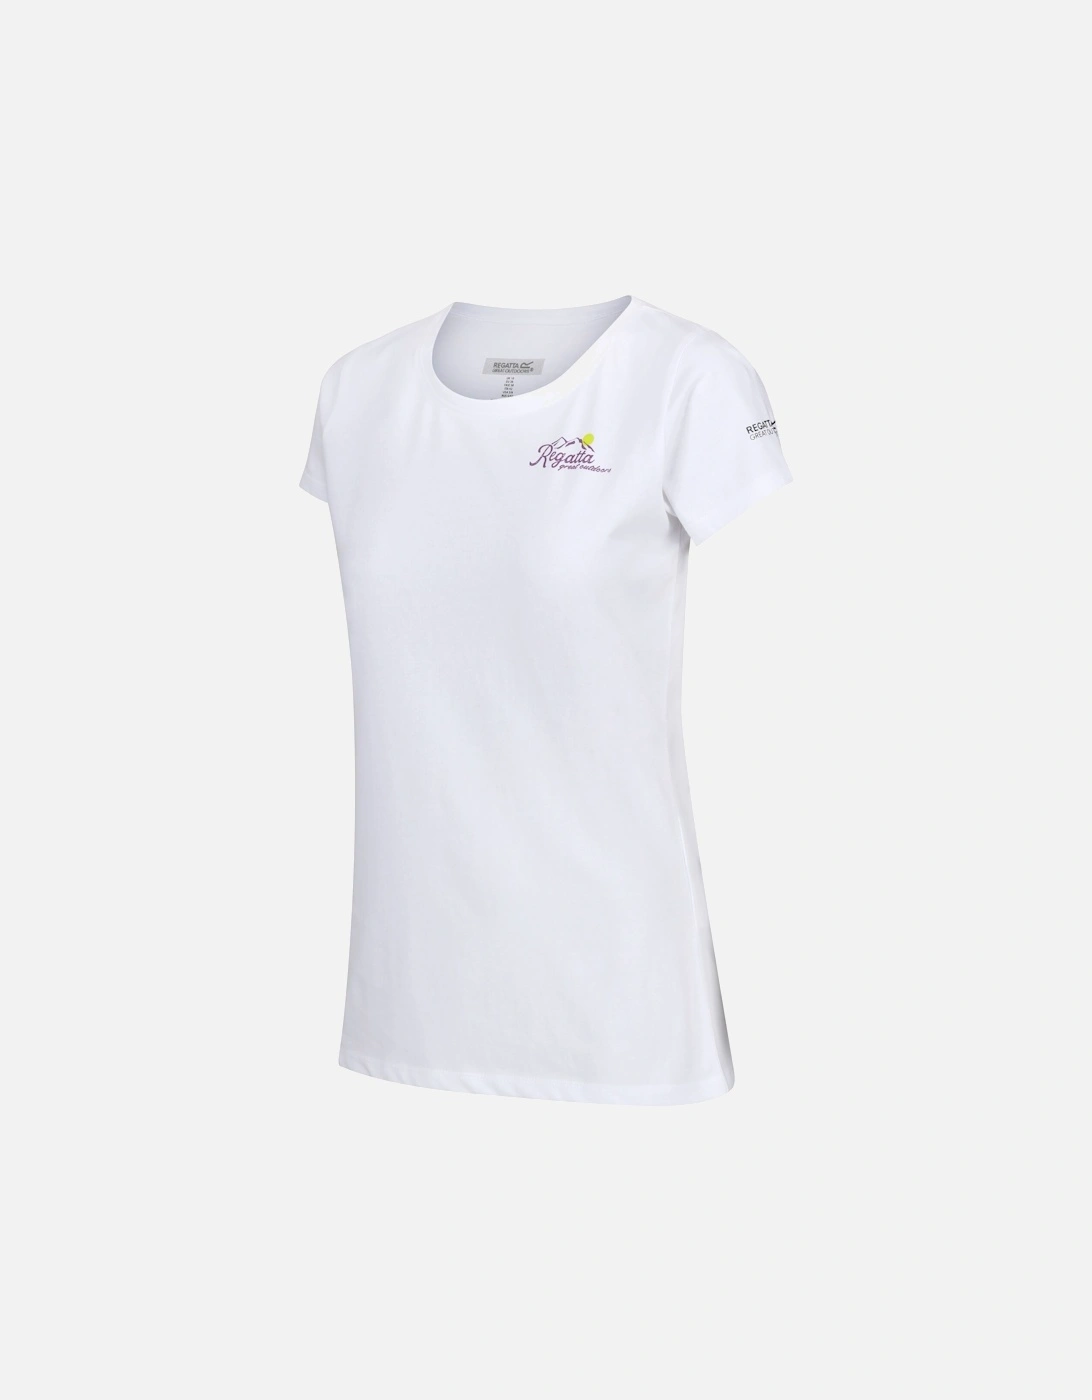 Womens/Ladies Breezed IV Back Print T-Shirt